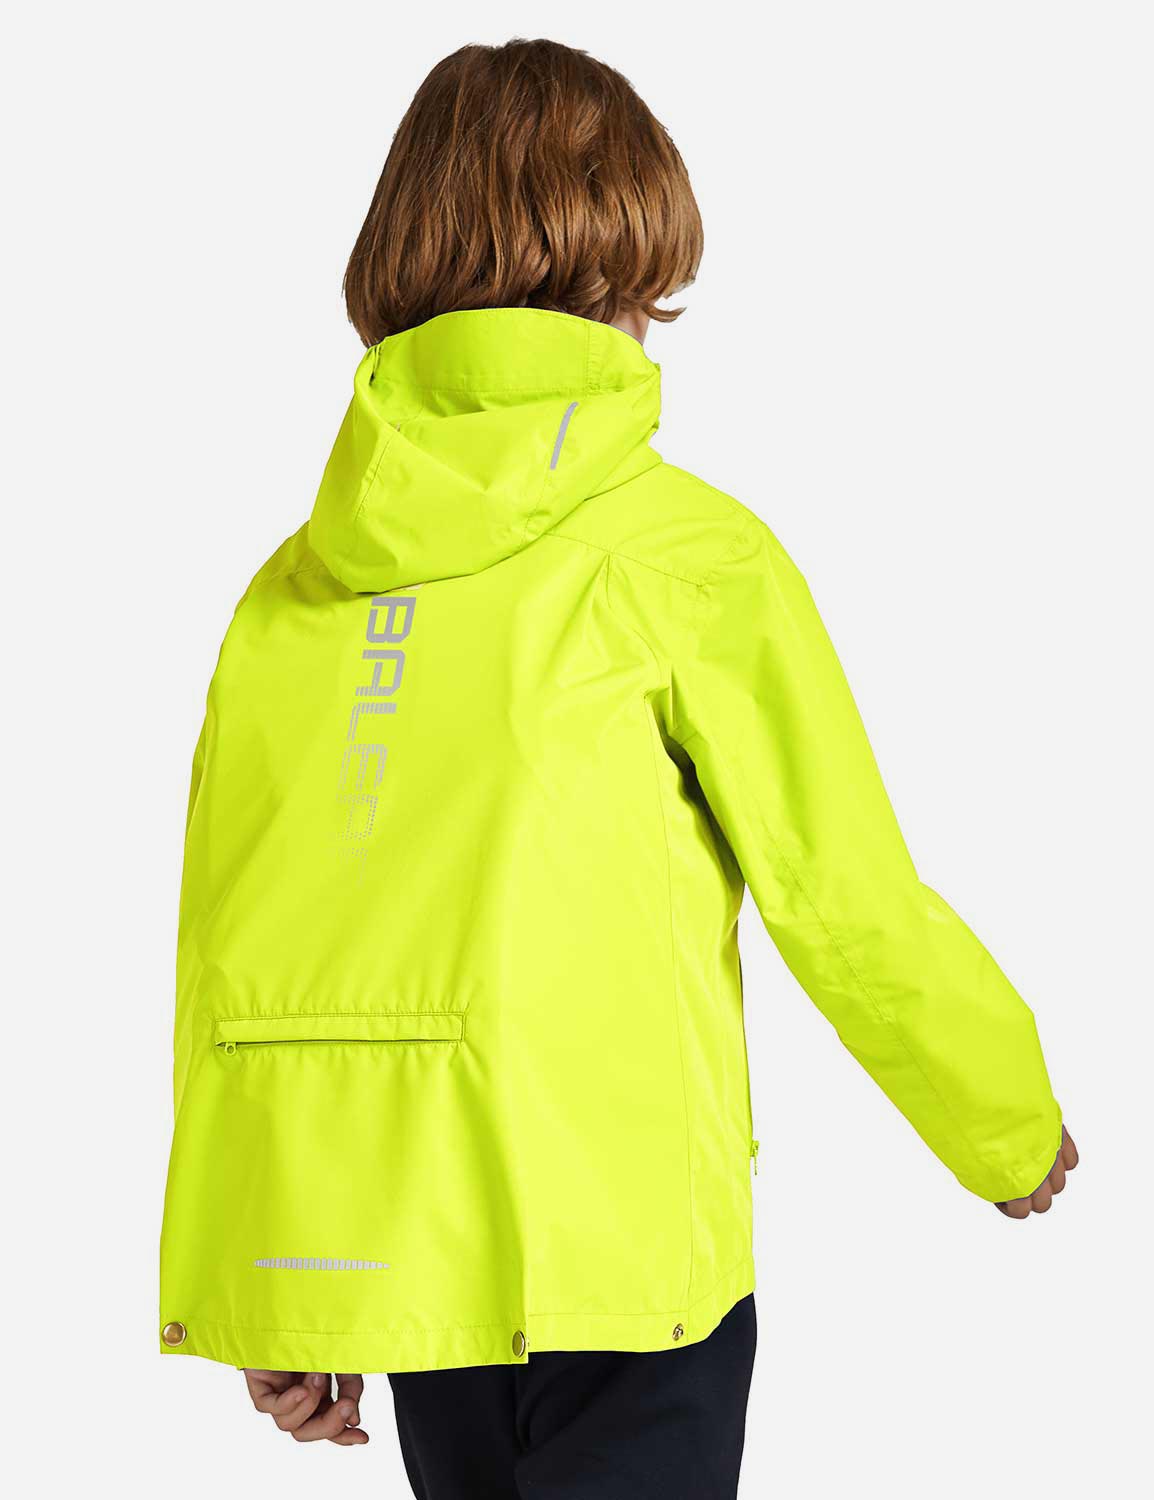 Baleaf Kid's Waterproof Outdoor Hooded Cycling Rain Jacket cai037 Yellow Back Detail